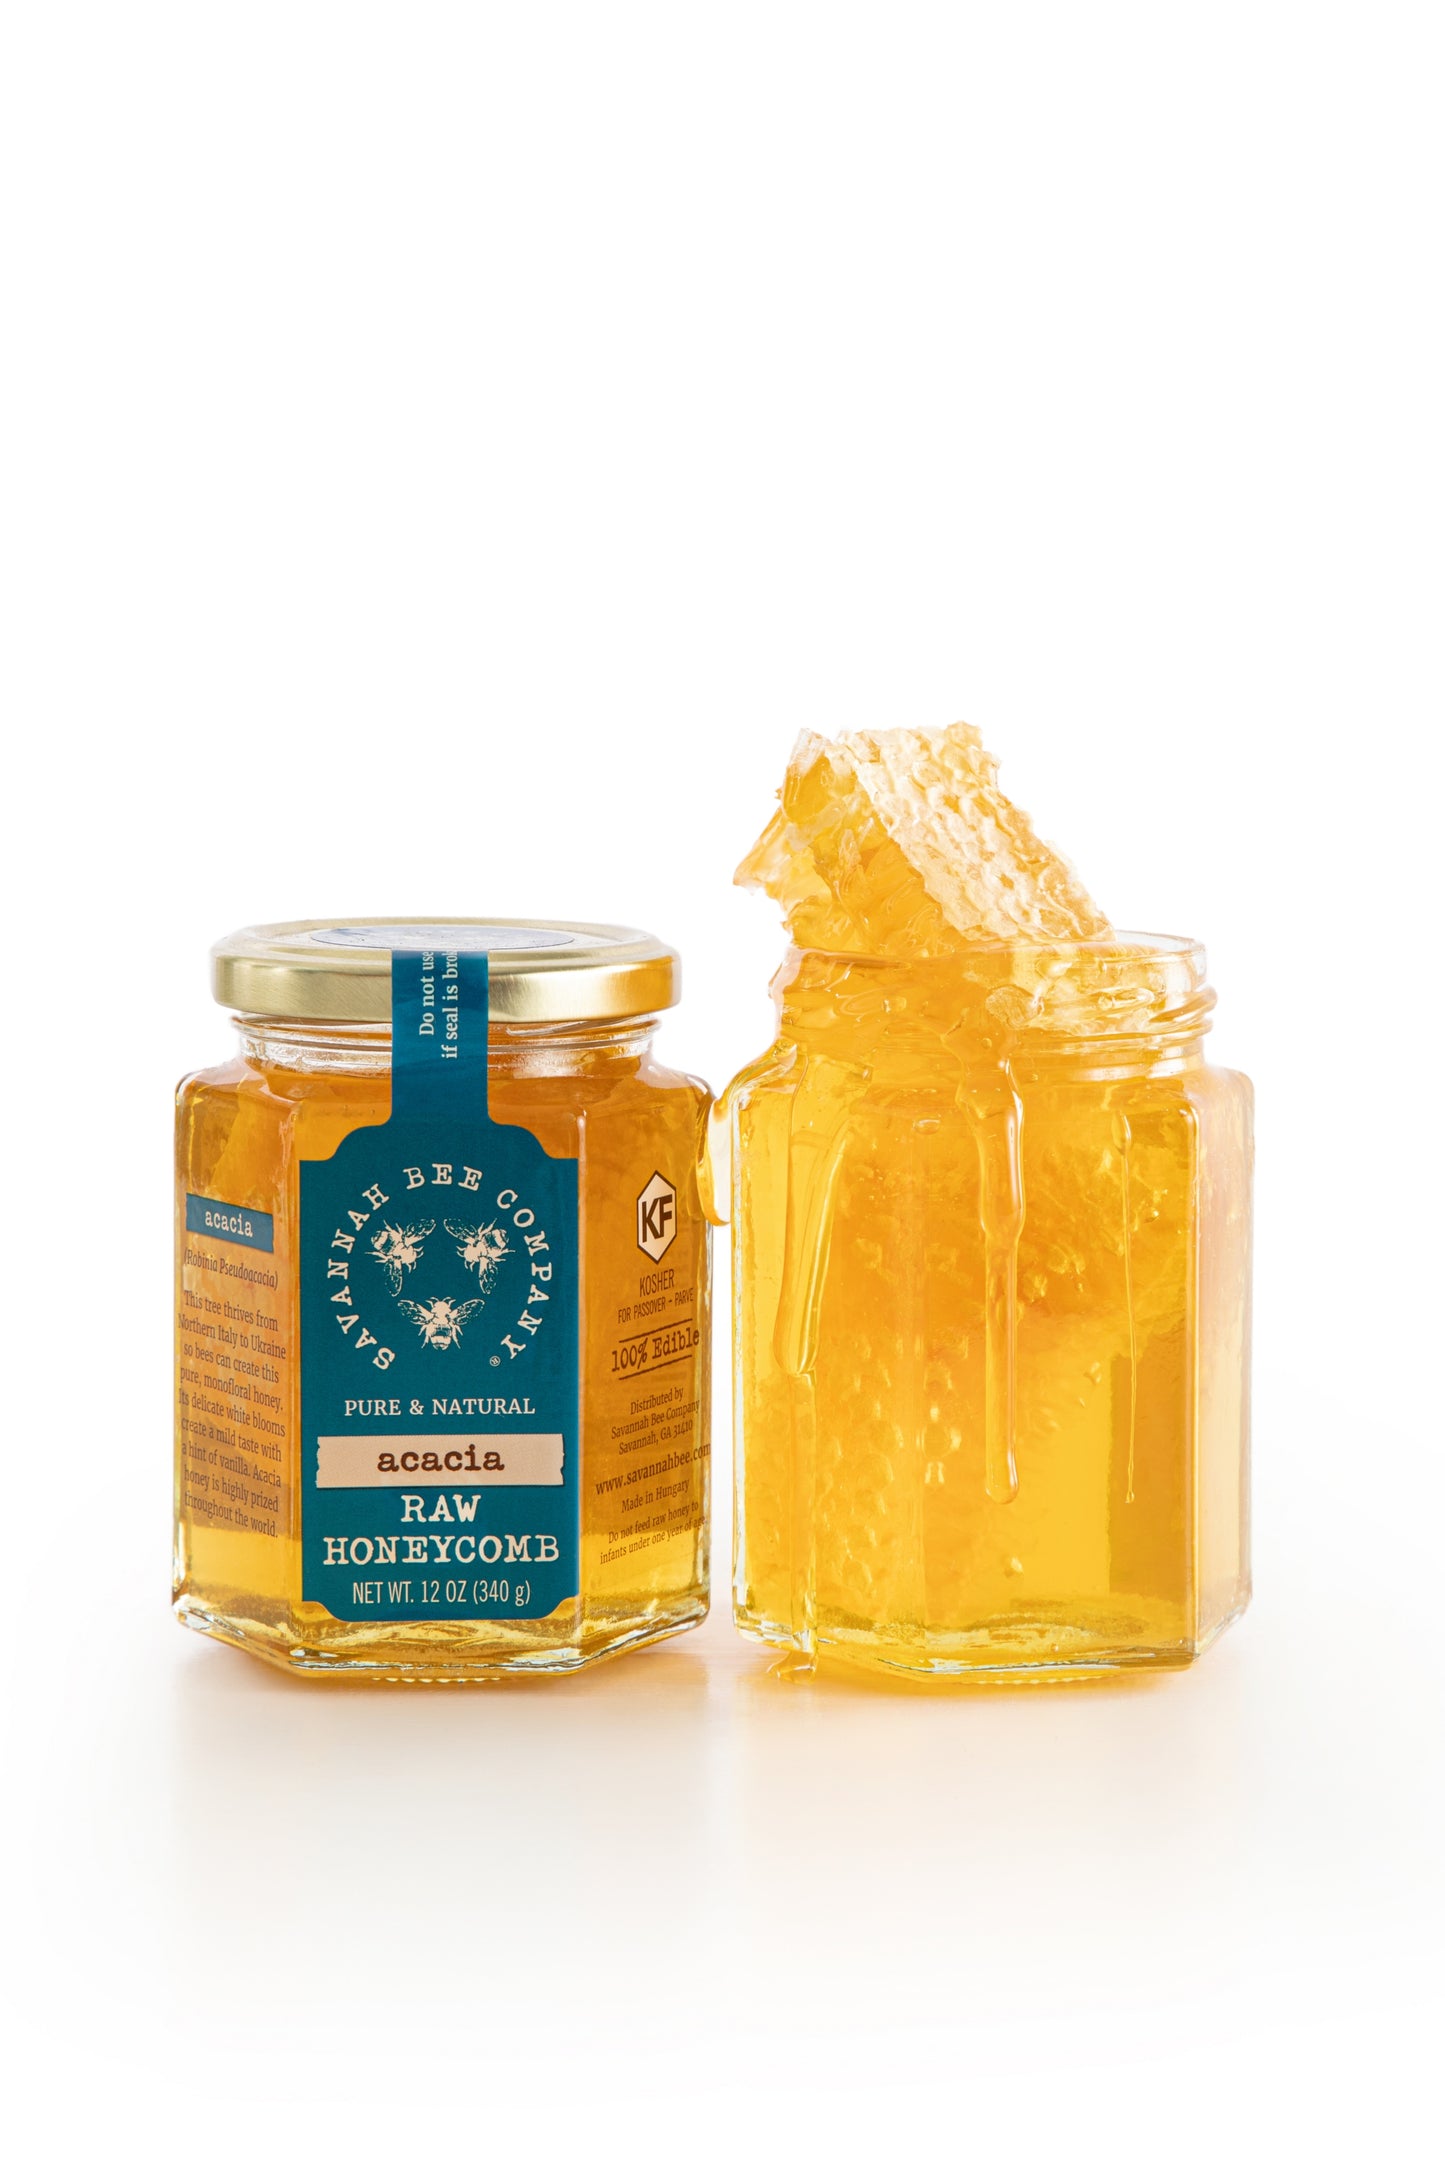 Honeycomb In Honey- Pint Jar - Bee Squared Apiaries